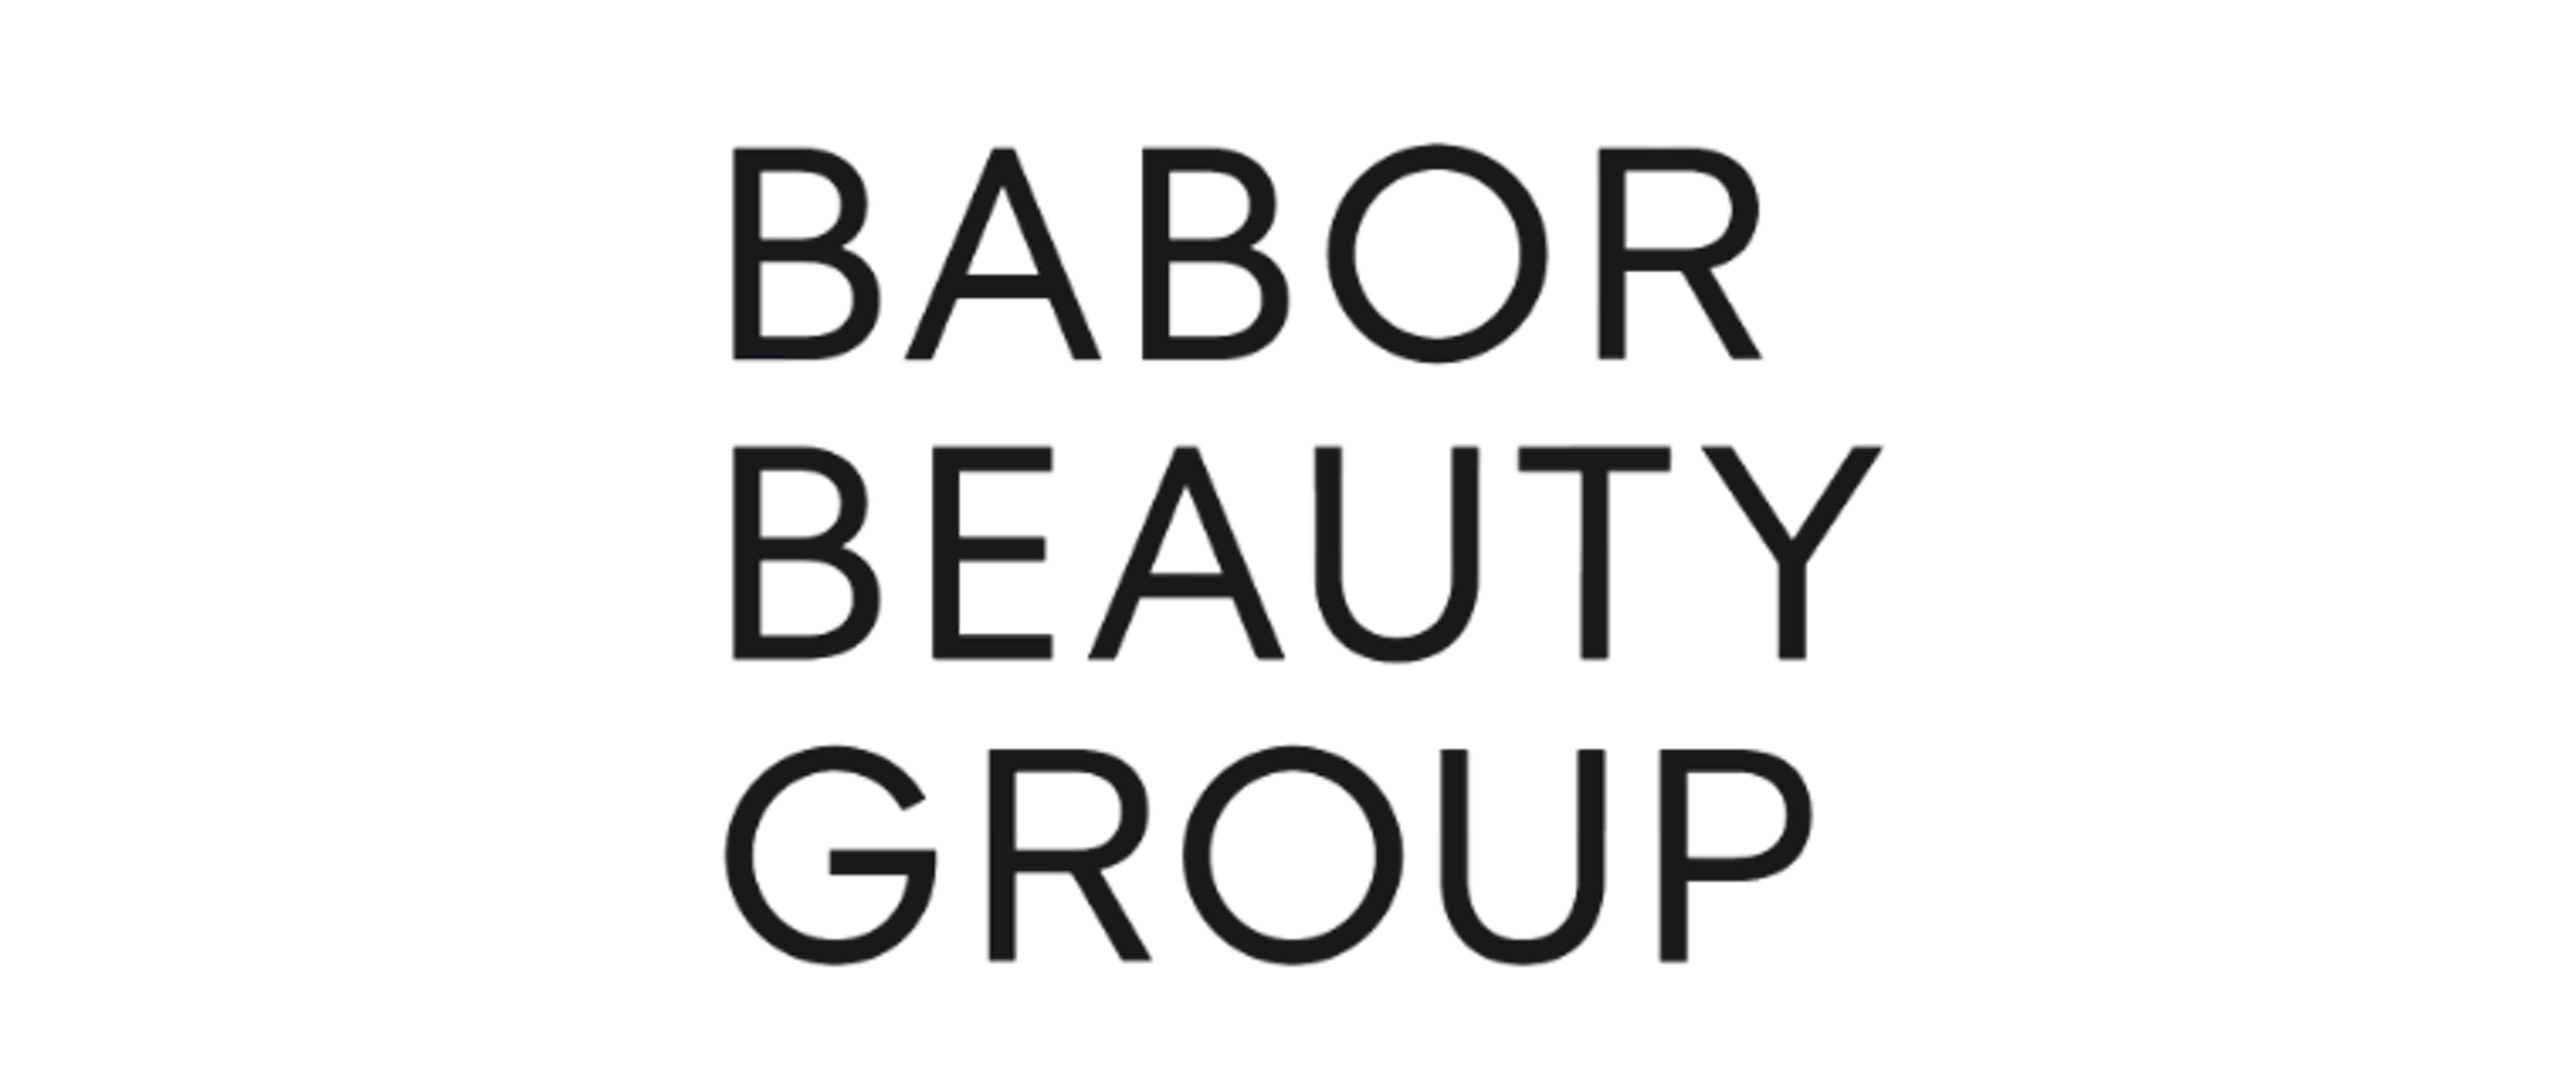 Logo Babor Beauty Group